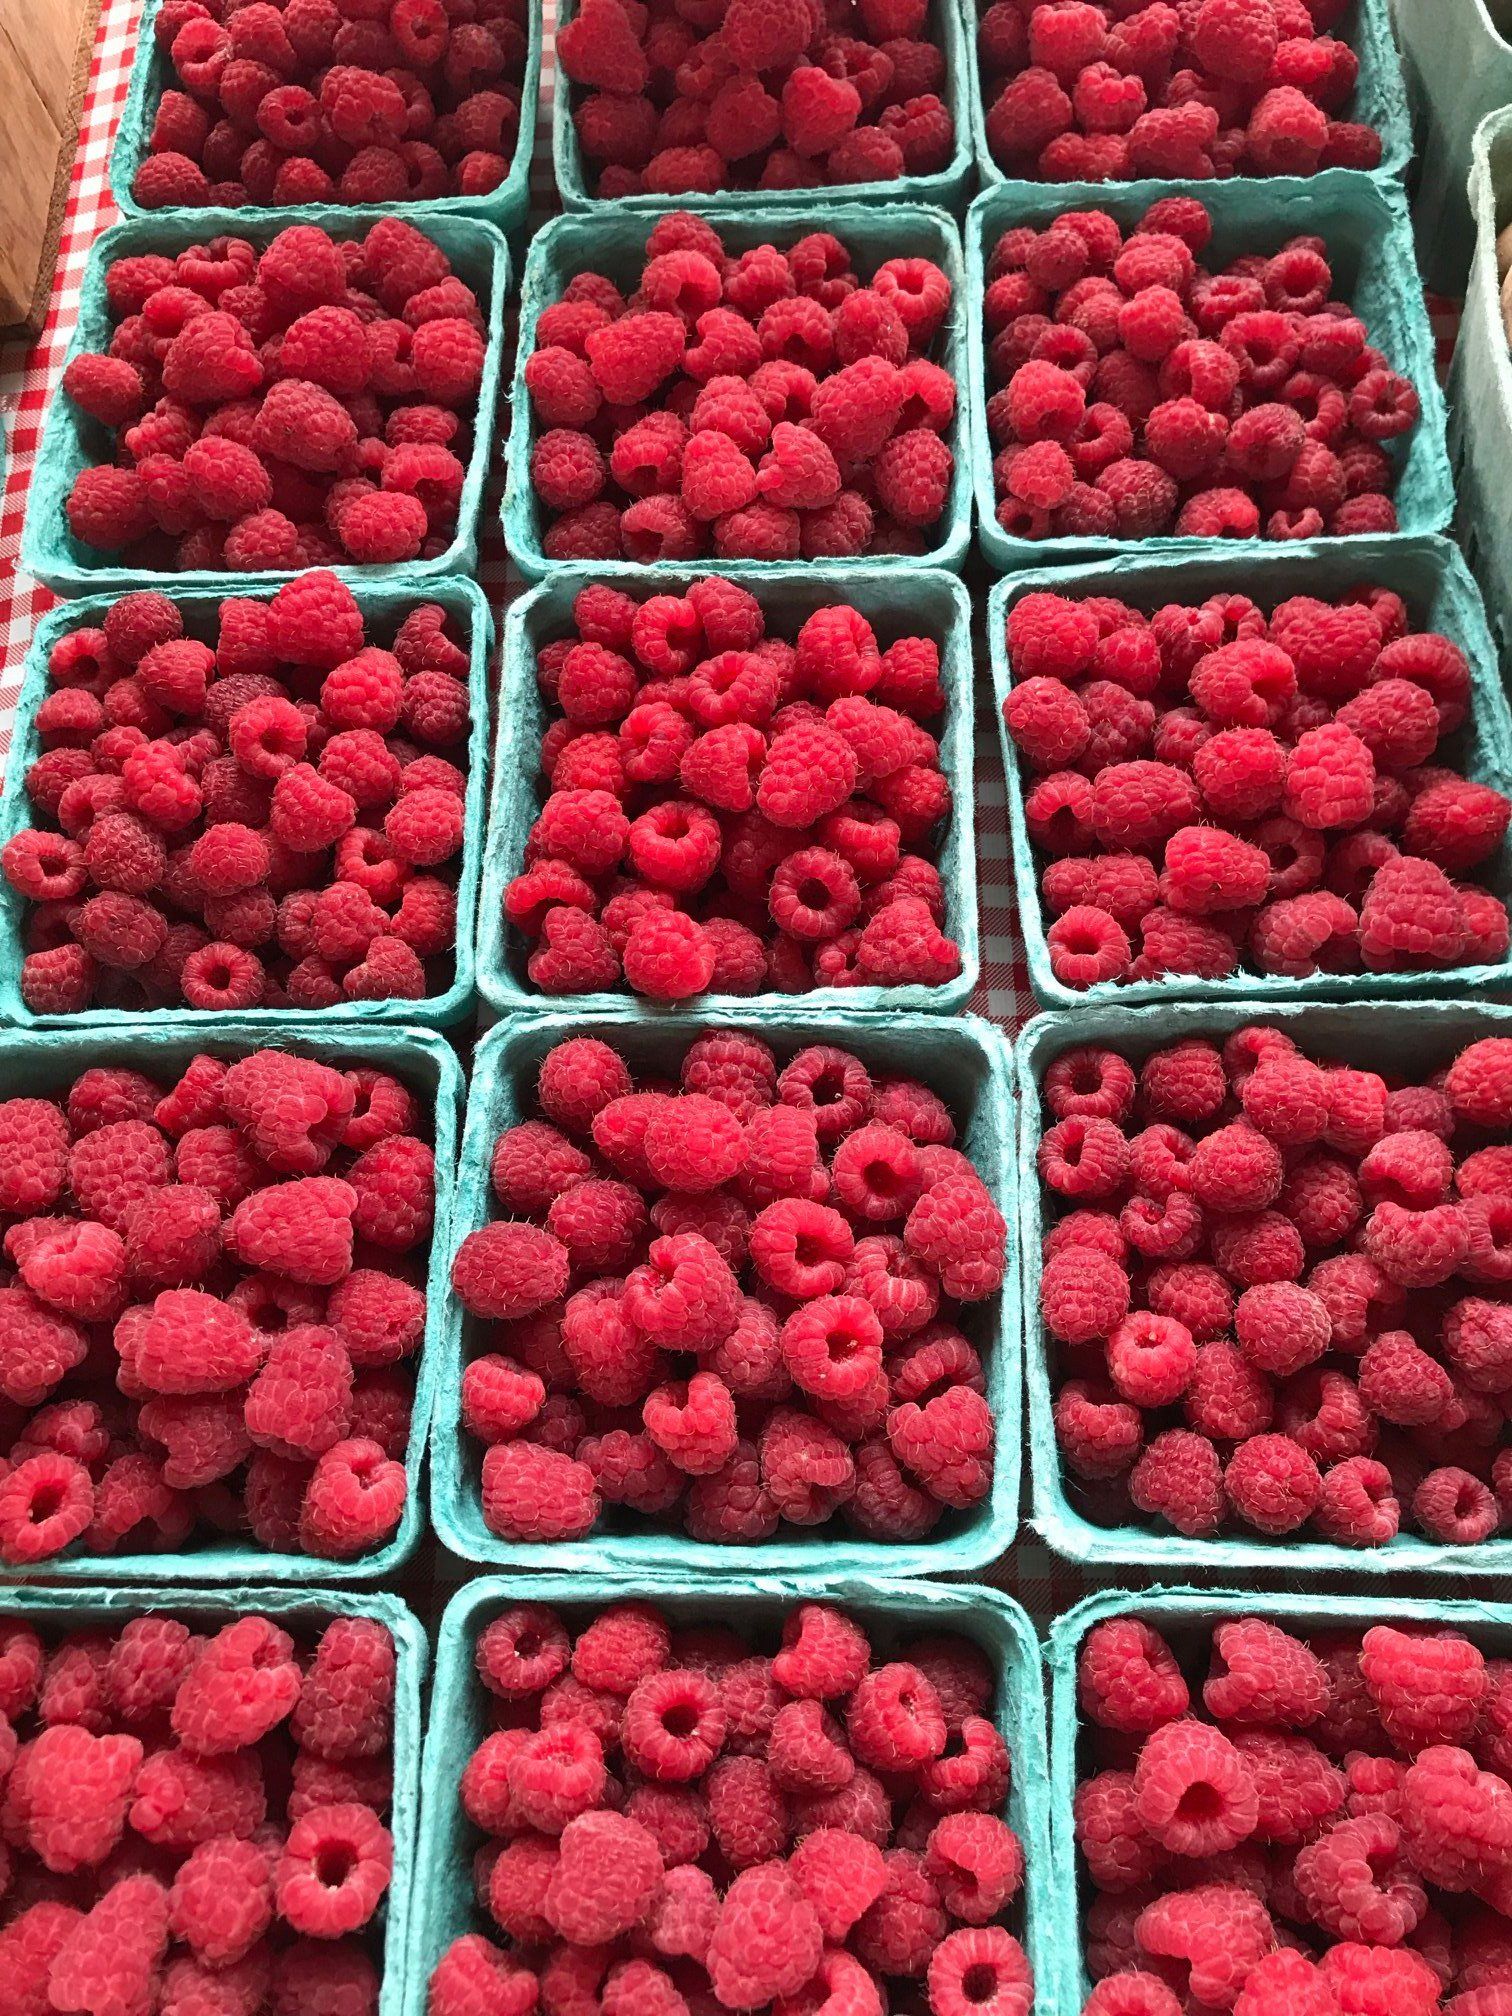 Next Happening: Raspberries Are Back!